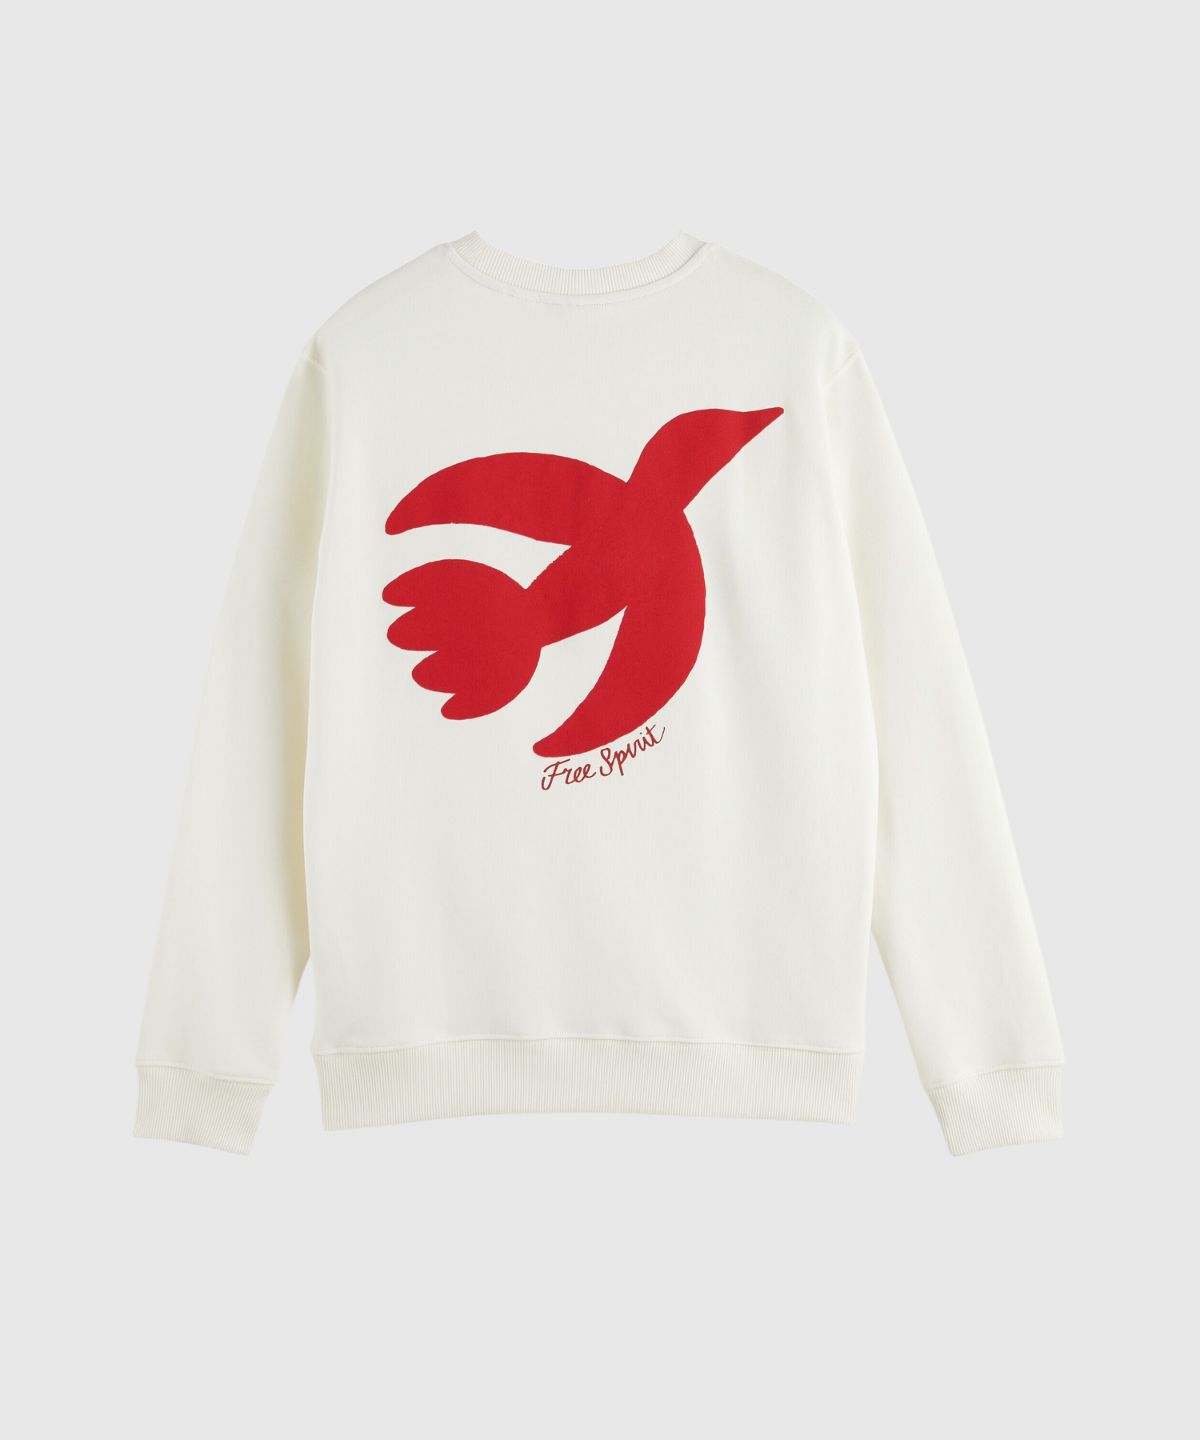 The free spirit peace bird Organic Cotton sweatshirt